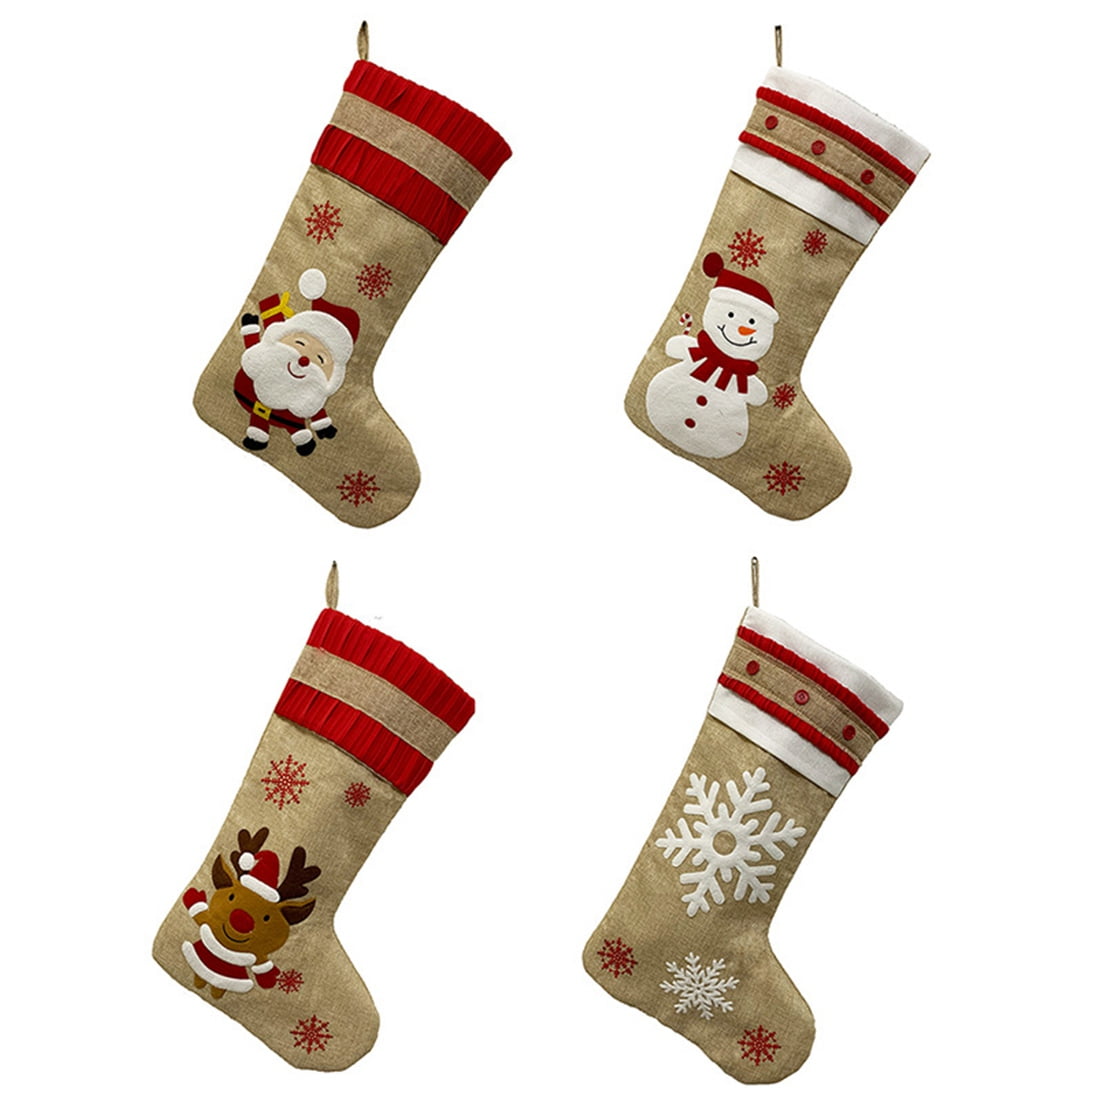 CHRISTMAS JUTE HESSIAN STOCKING Kids Xmas Stockings Printed Santa Gift Sack UK 